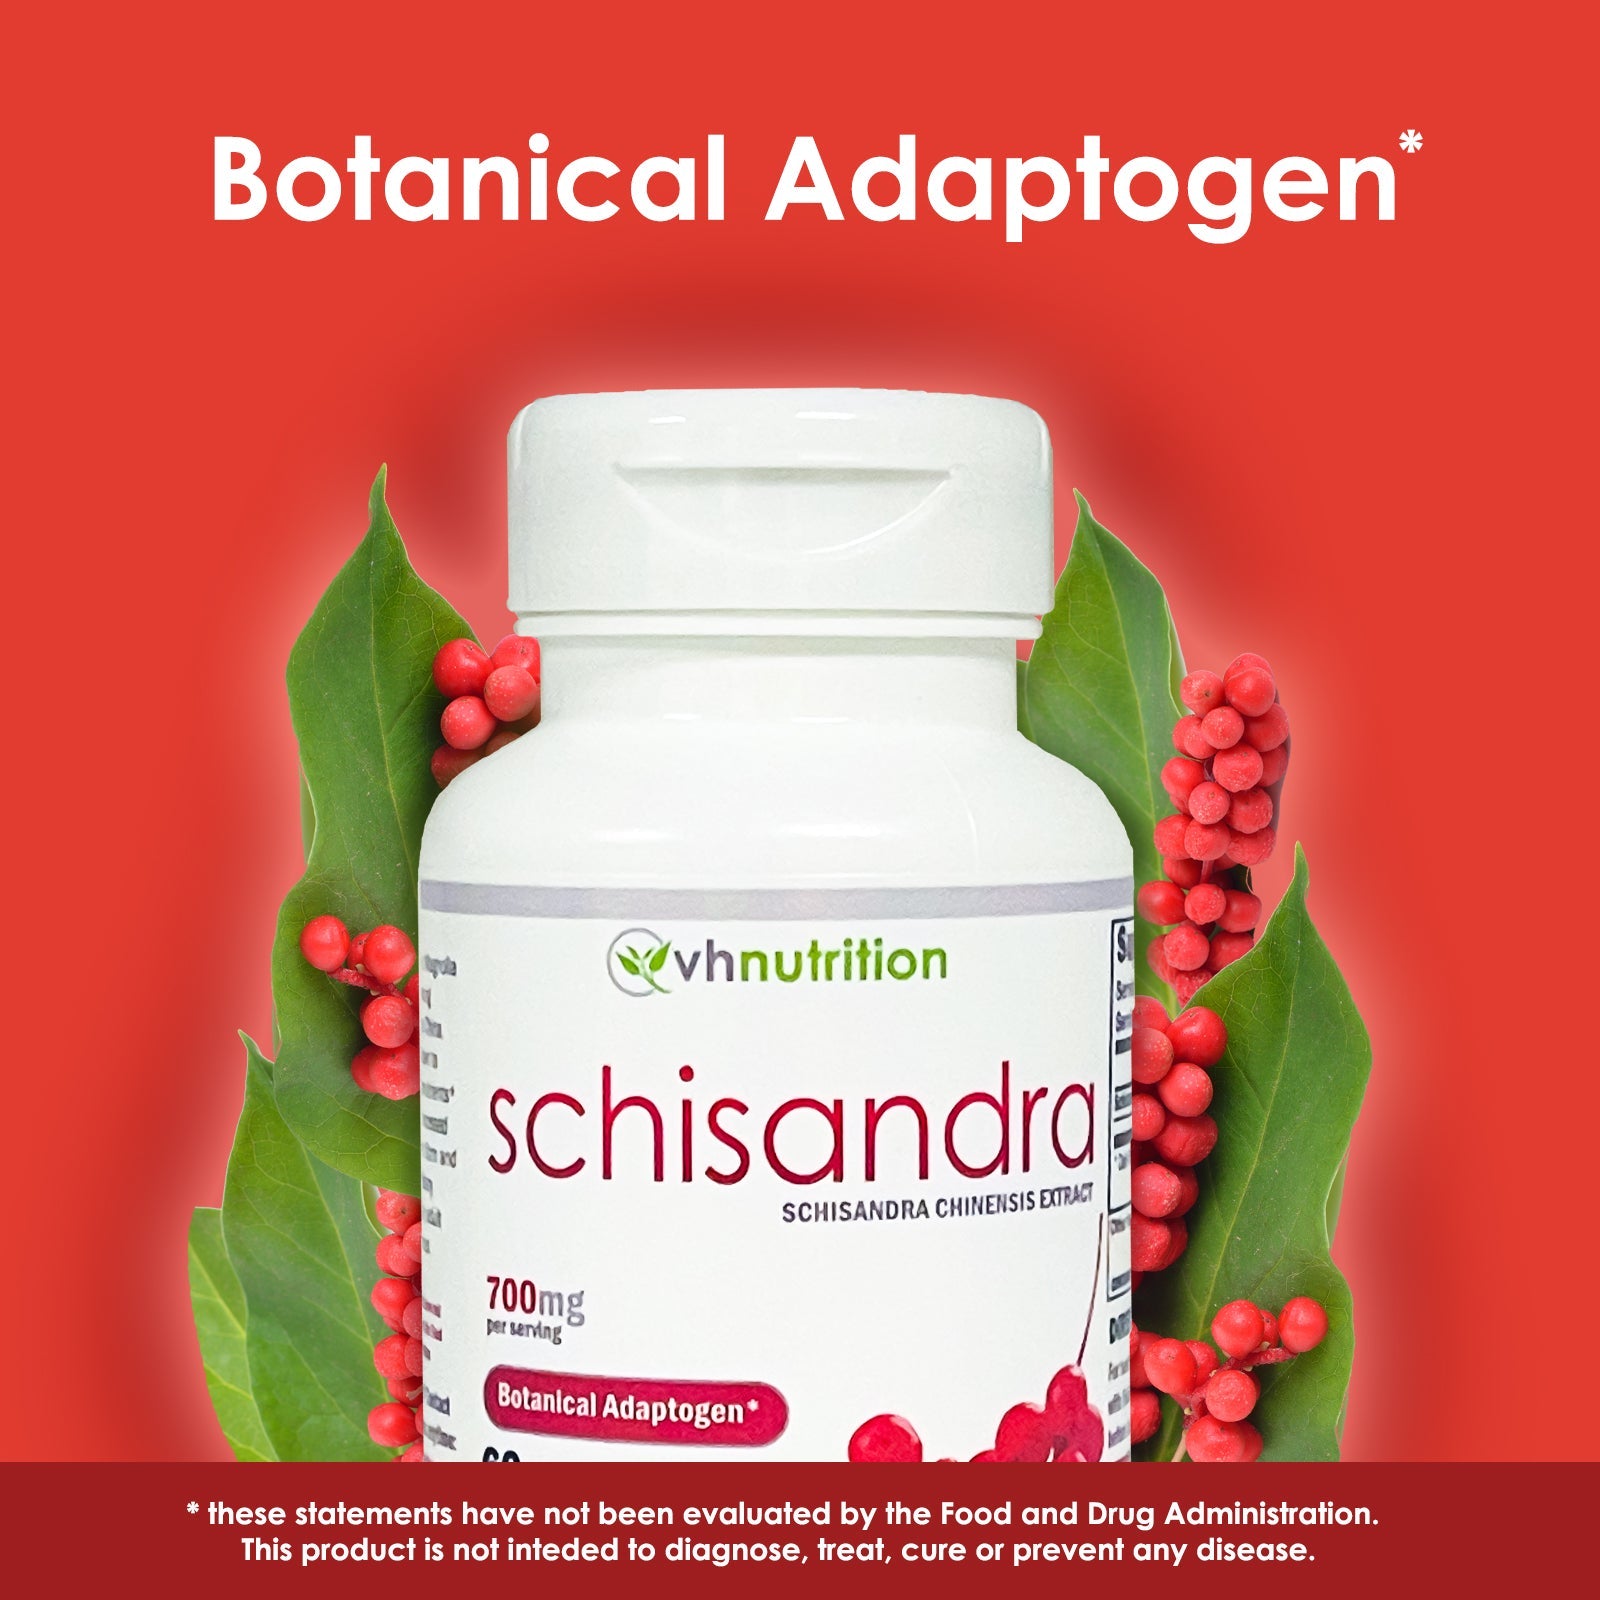 VH Nutrition SCHISANDRA | Botanical Adaptogen* |Schisandra Chinensis Extract | 700mg Proprietary Formula | 60 Capsules